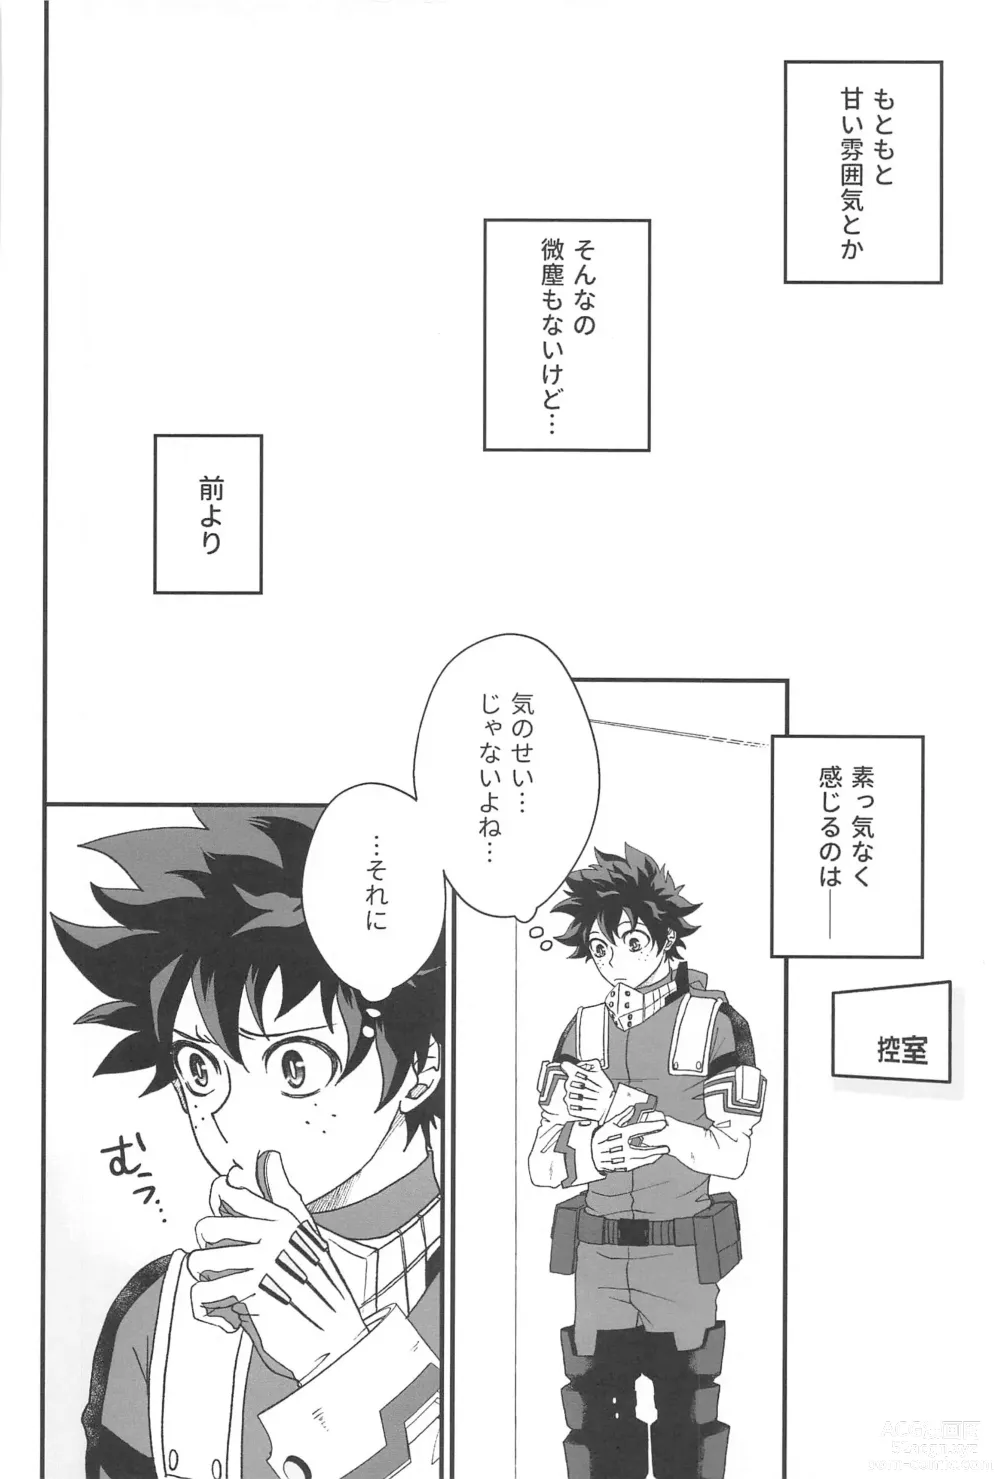 Page 7 of doujinshi 0.01